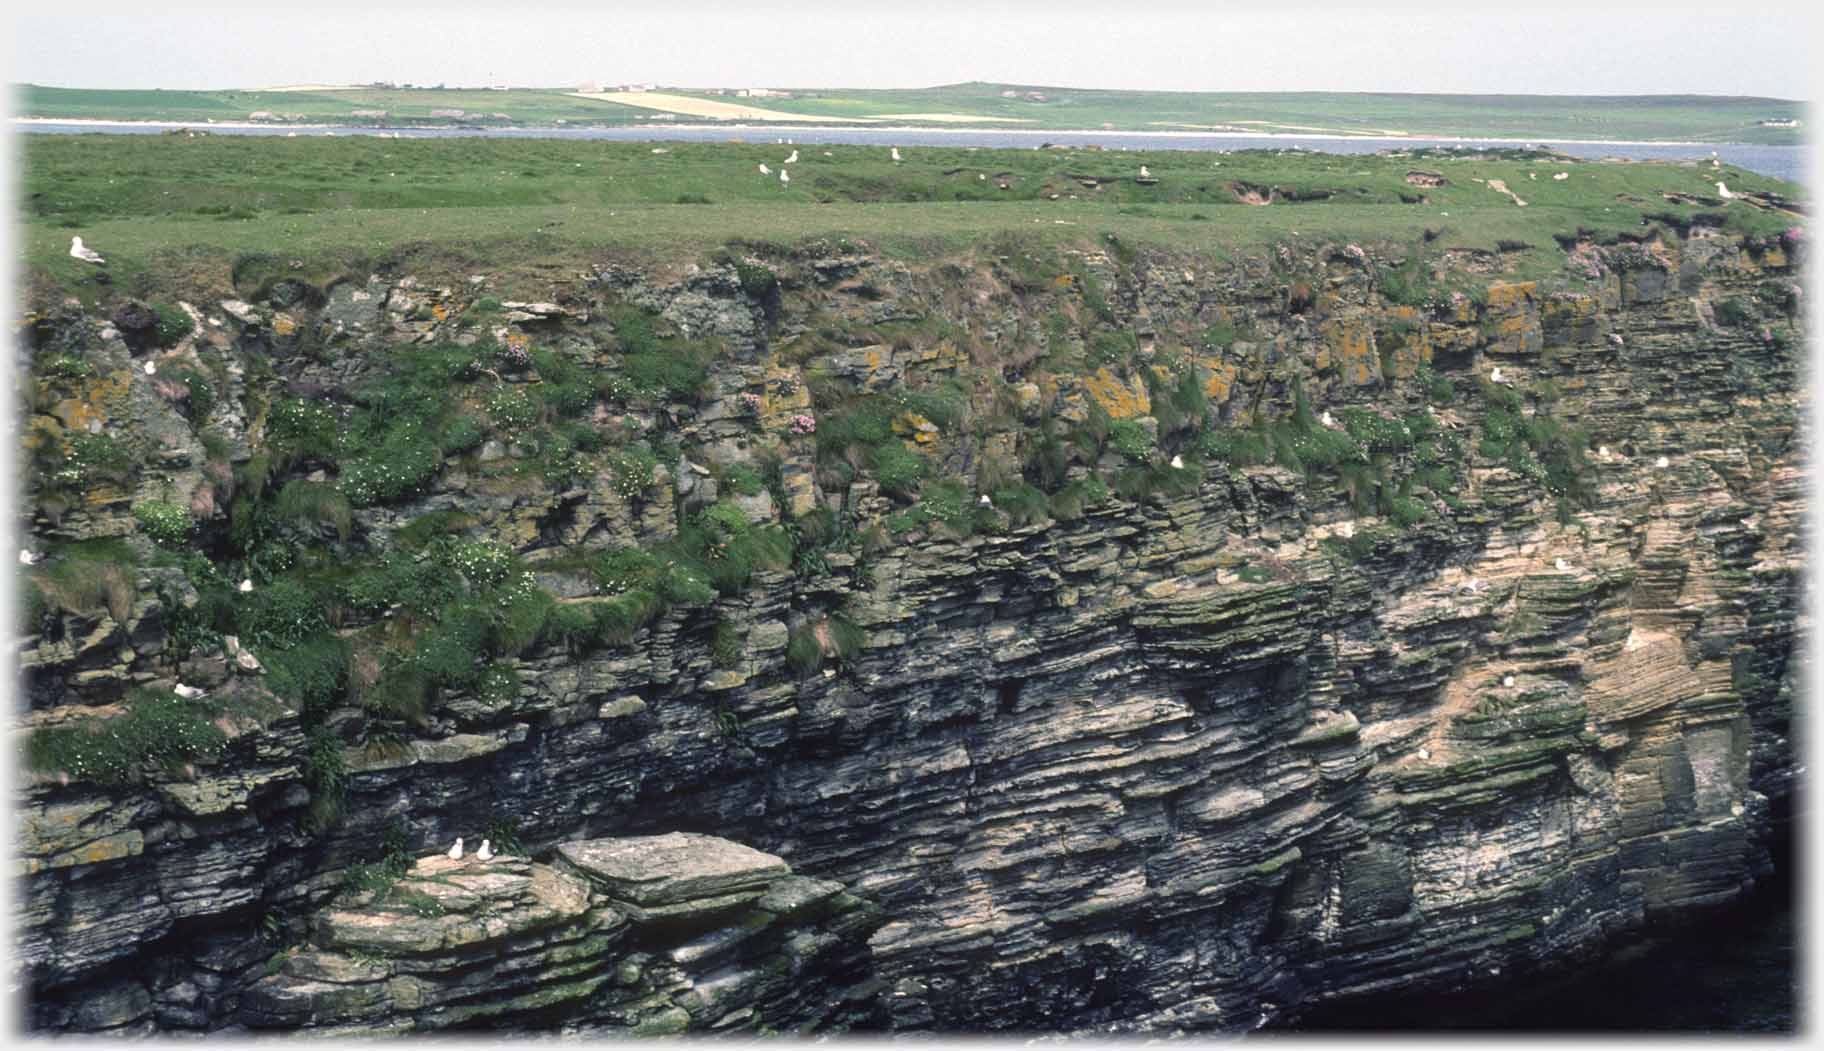 Stratified cliffs with birds nesting